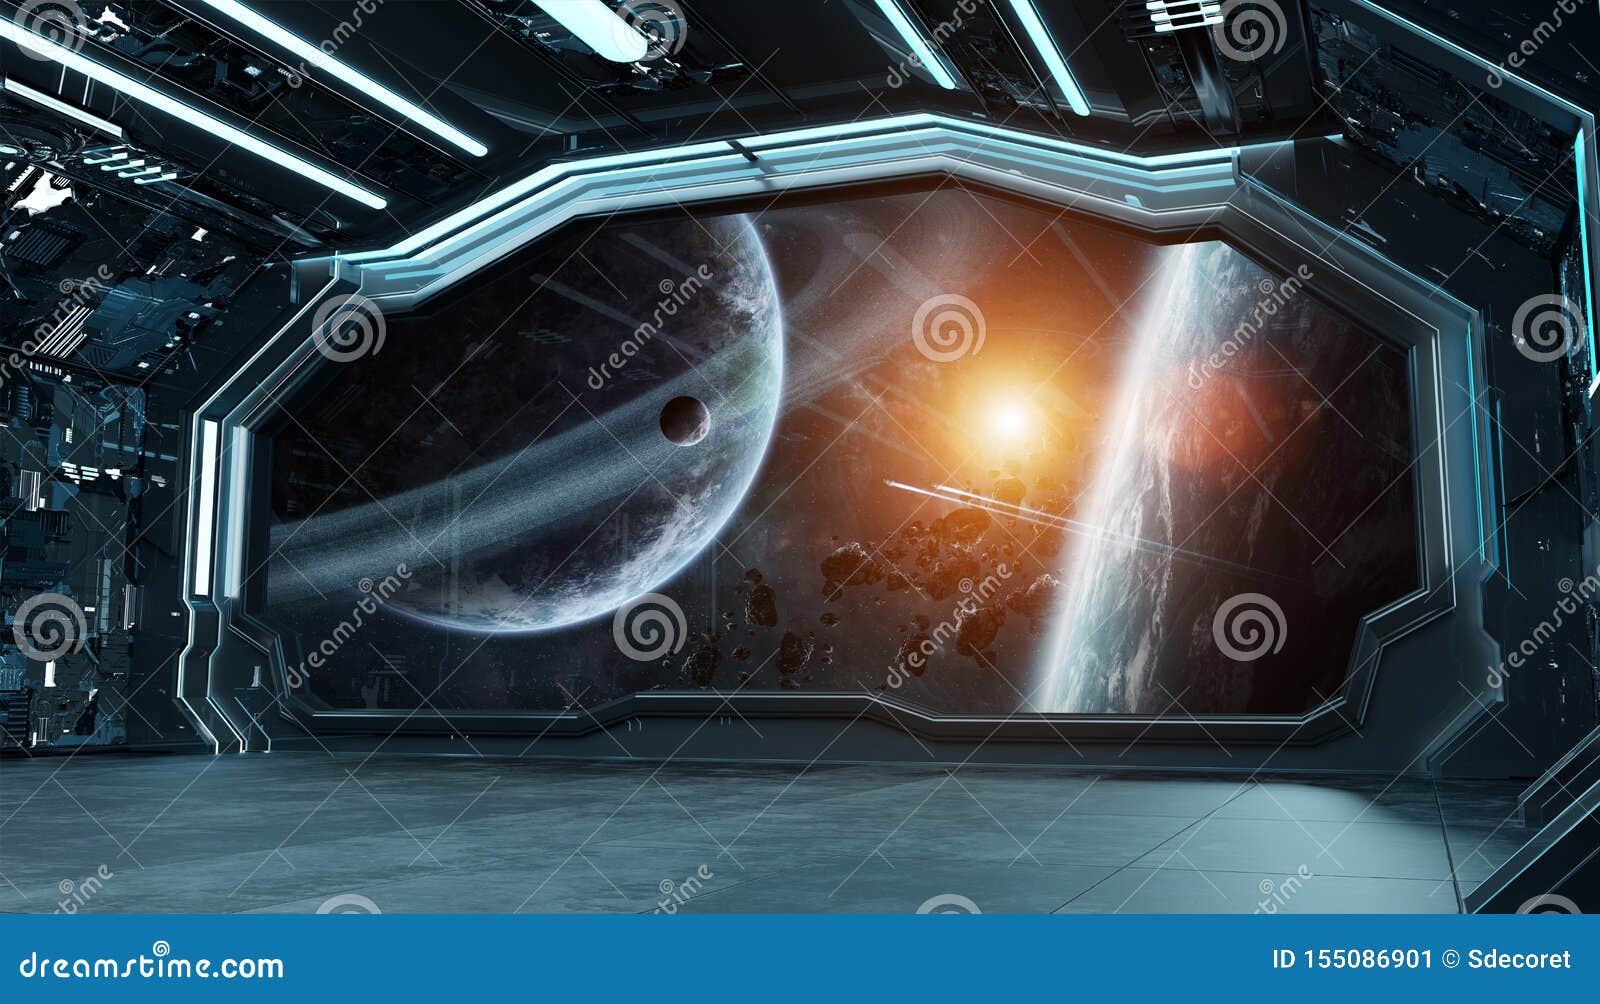 Dark Blue Spaceship Futuristic Interior With Window View On